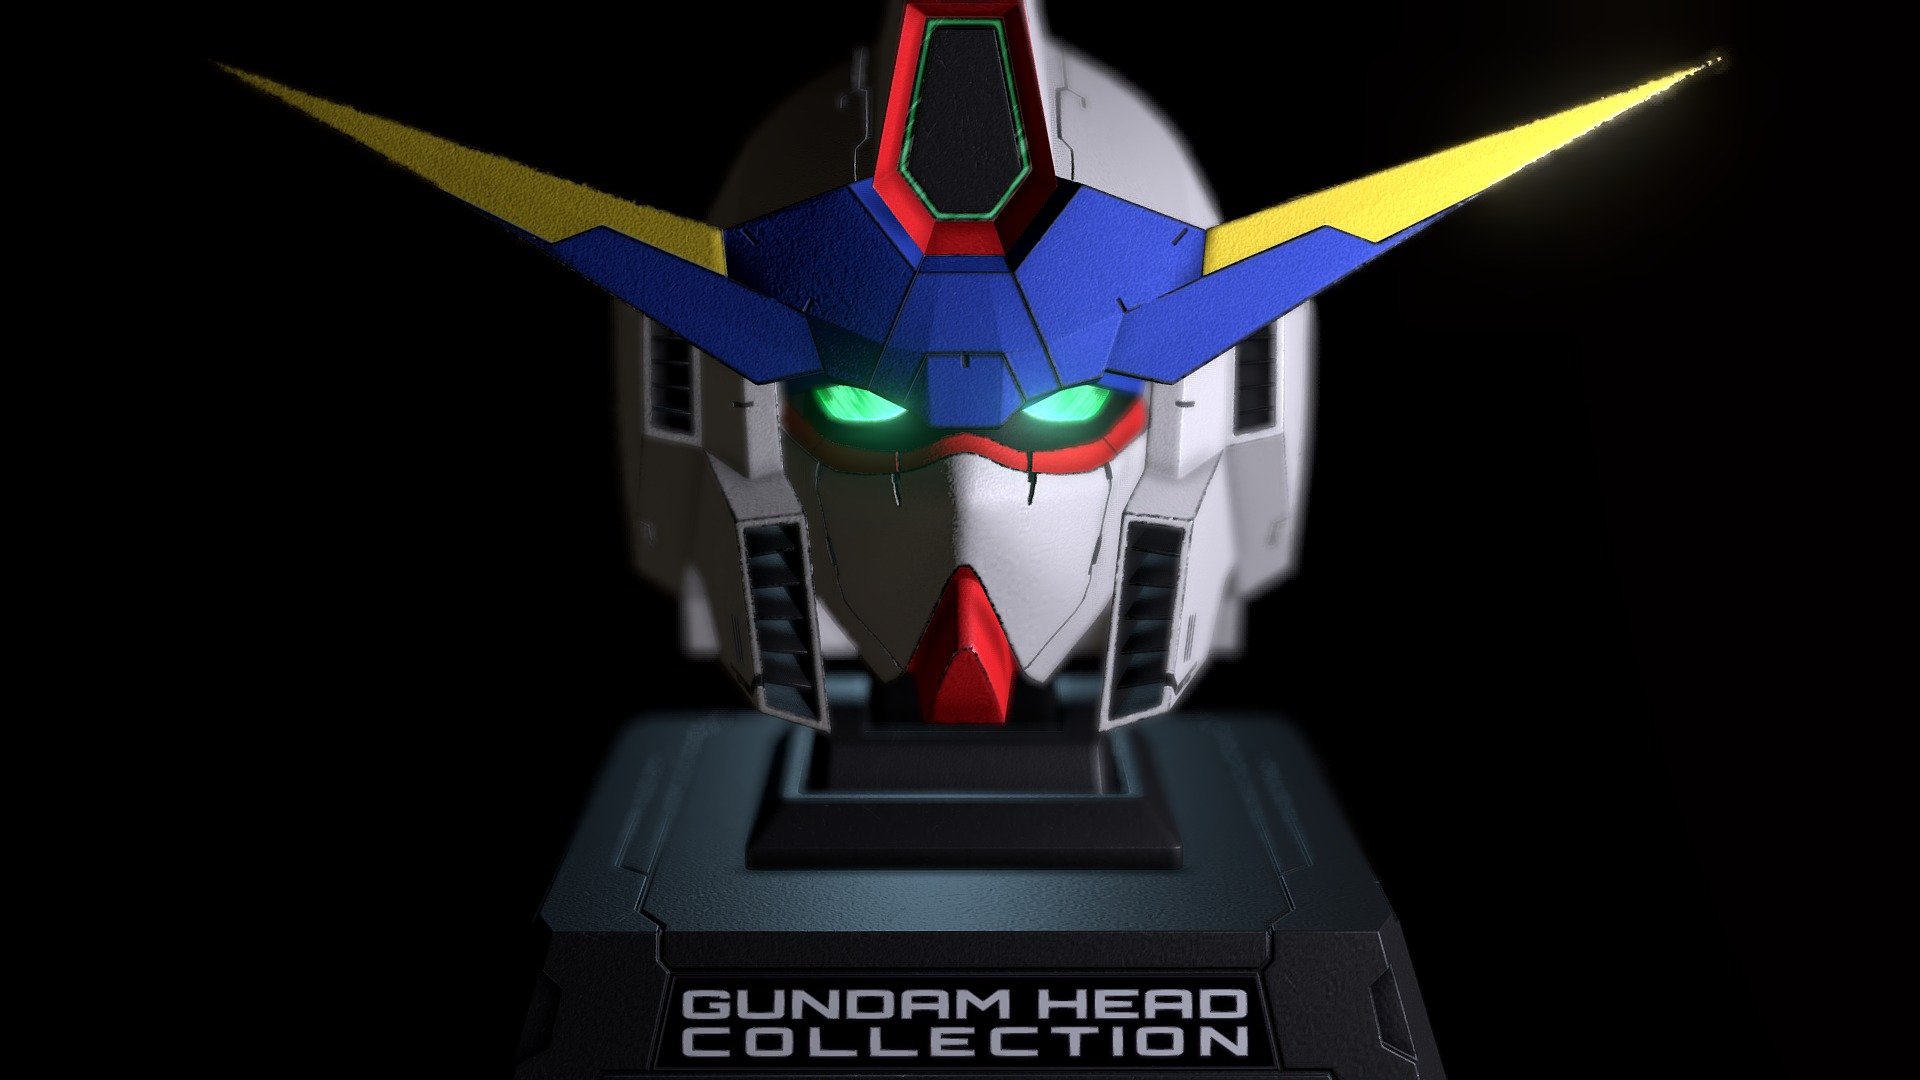 Gundam collection head.
Gundam G3 - Gundam Head - 3D model by IvanMax (@bigonethegod) 3d model